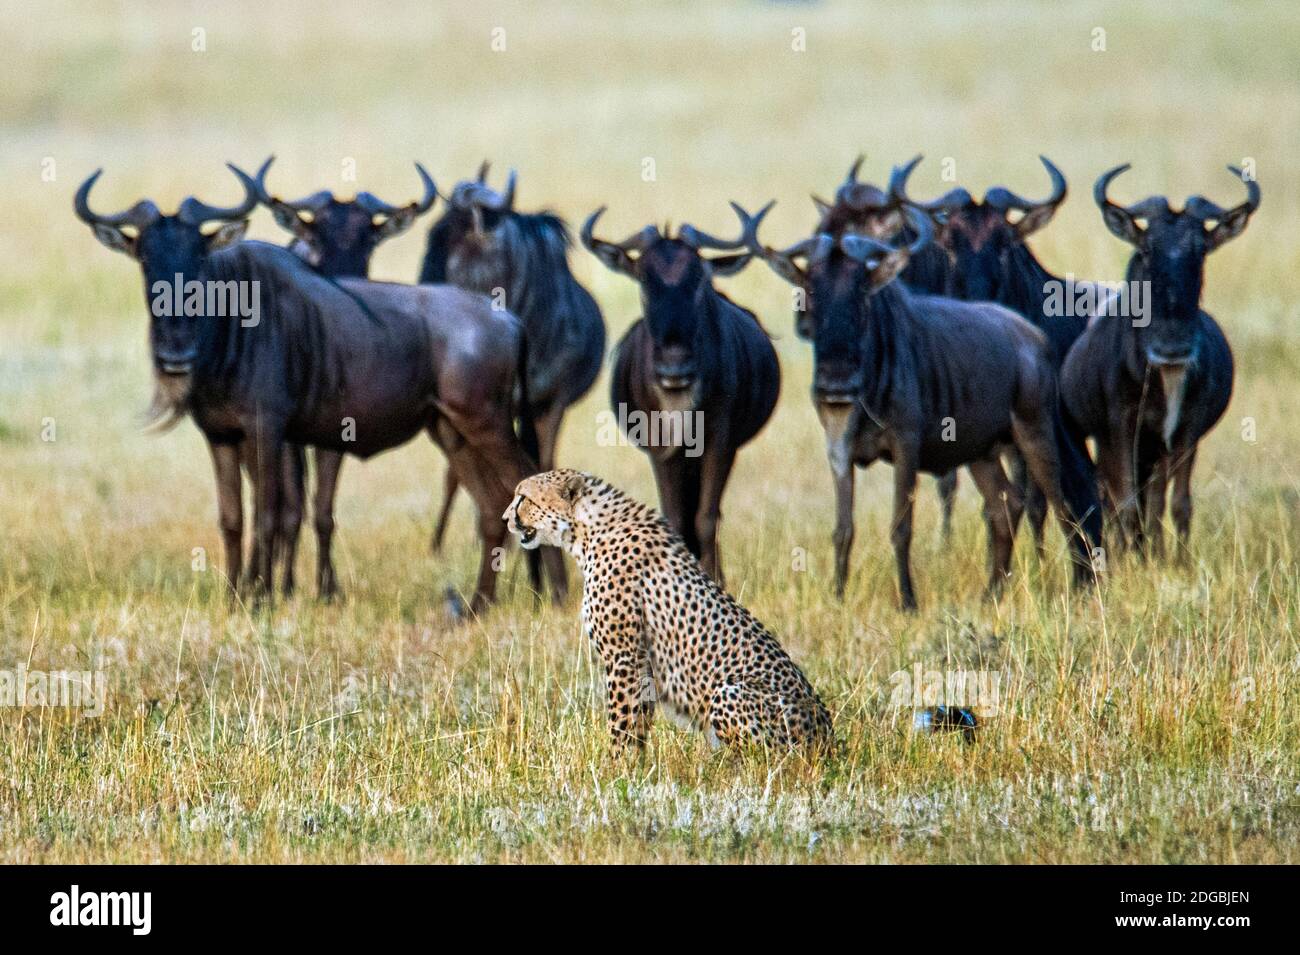 Cheetah (Acinonyx jubatus) with Blue wildebeests (Connochaetes taurinus) in the background, Tanzania Stock Photo